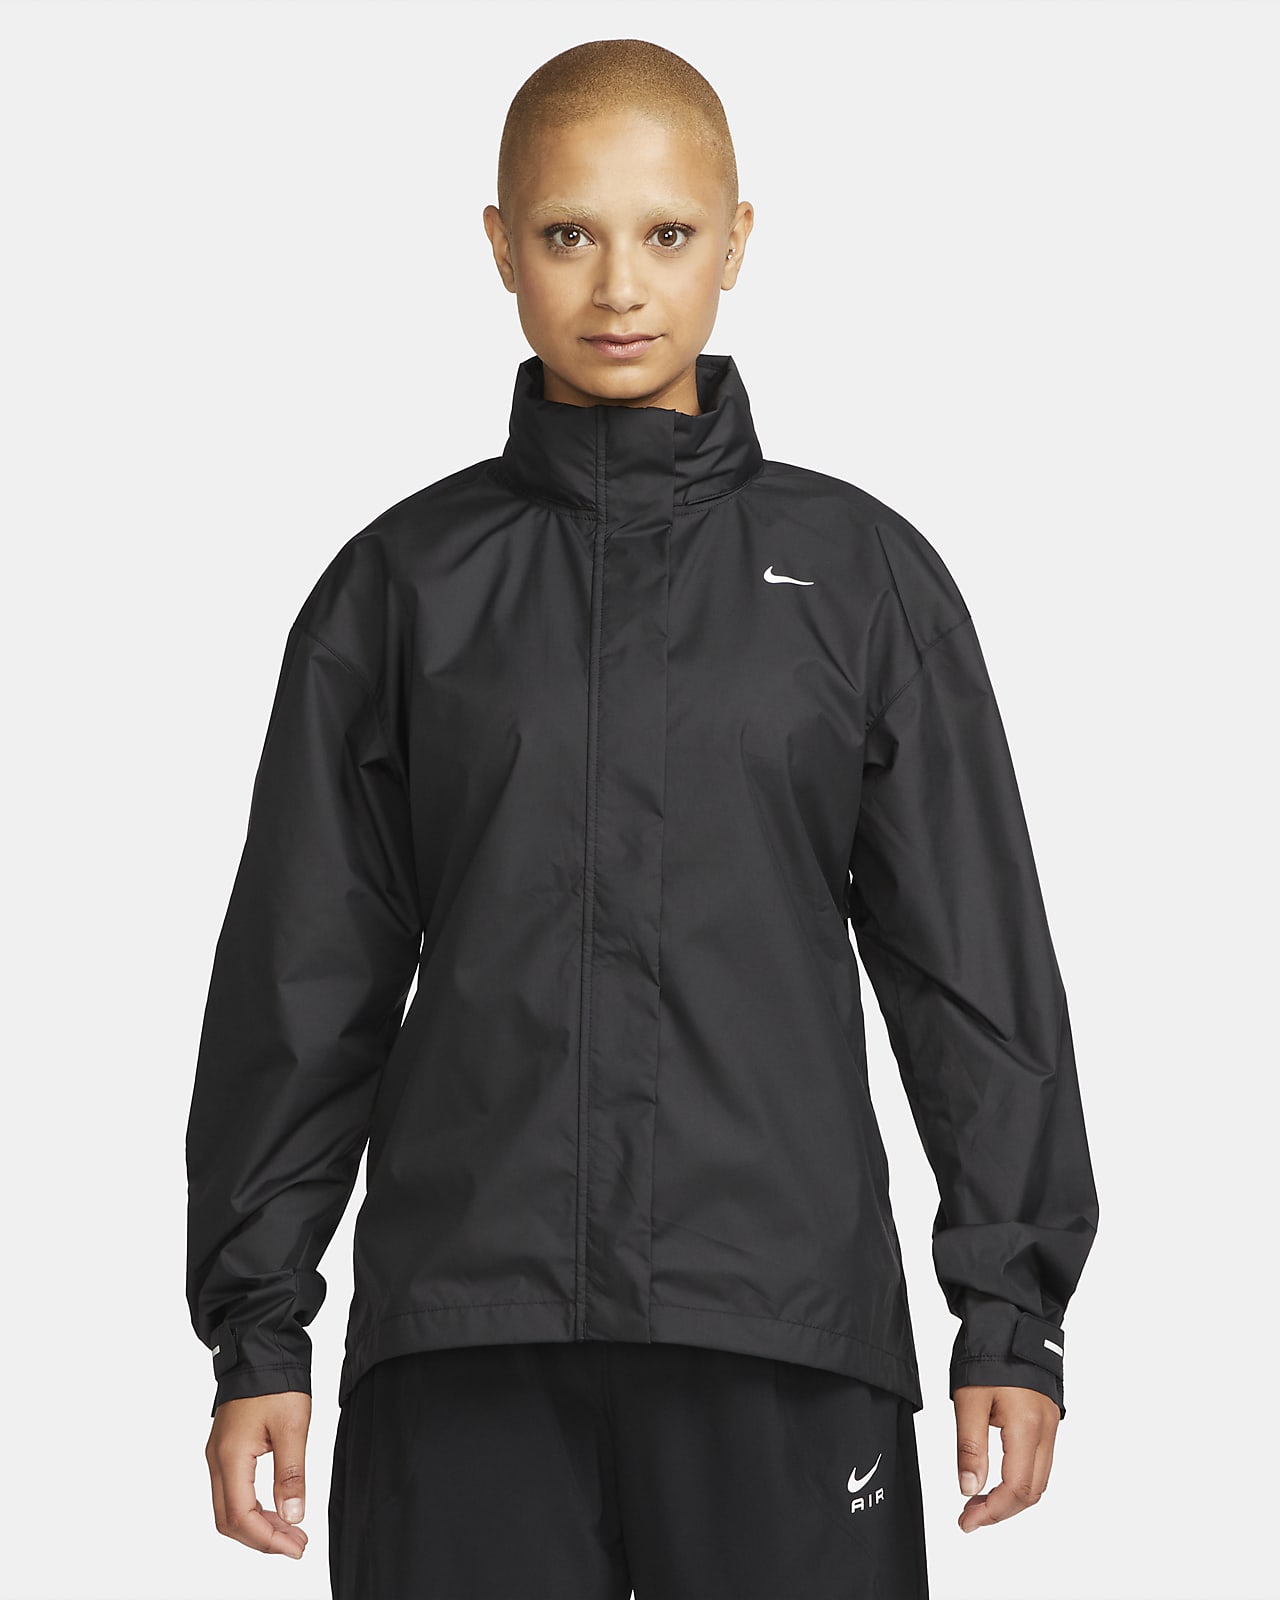 Women\'s Nike Repel Running Fast Jacket.